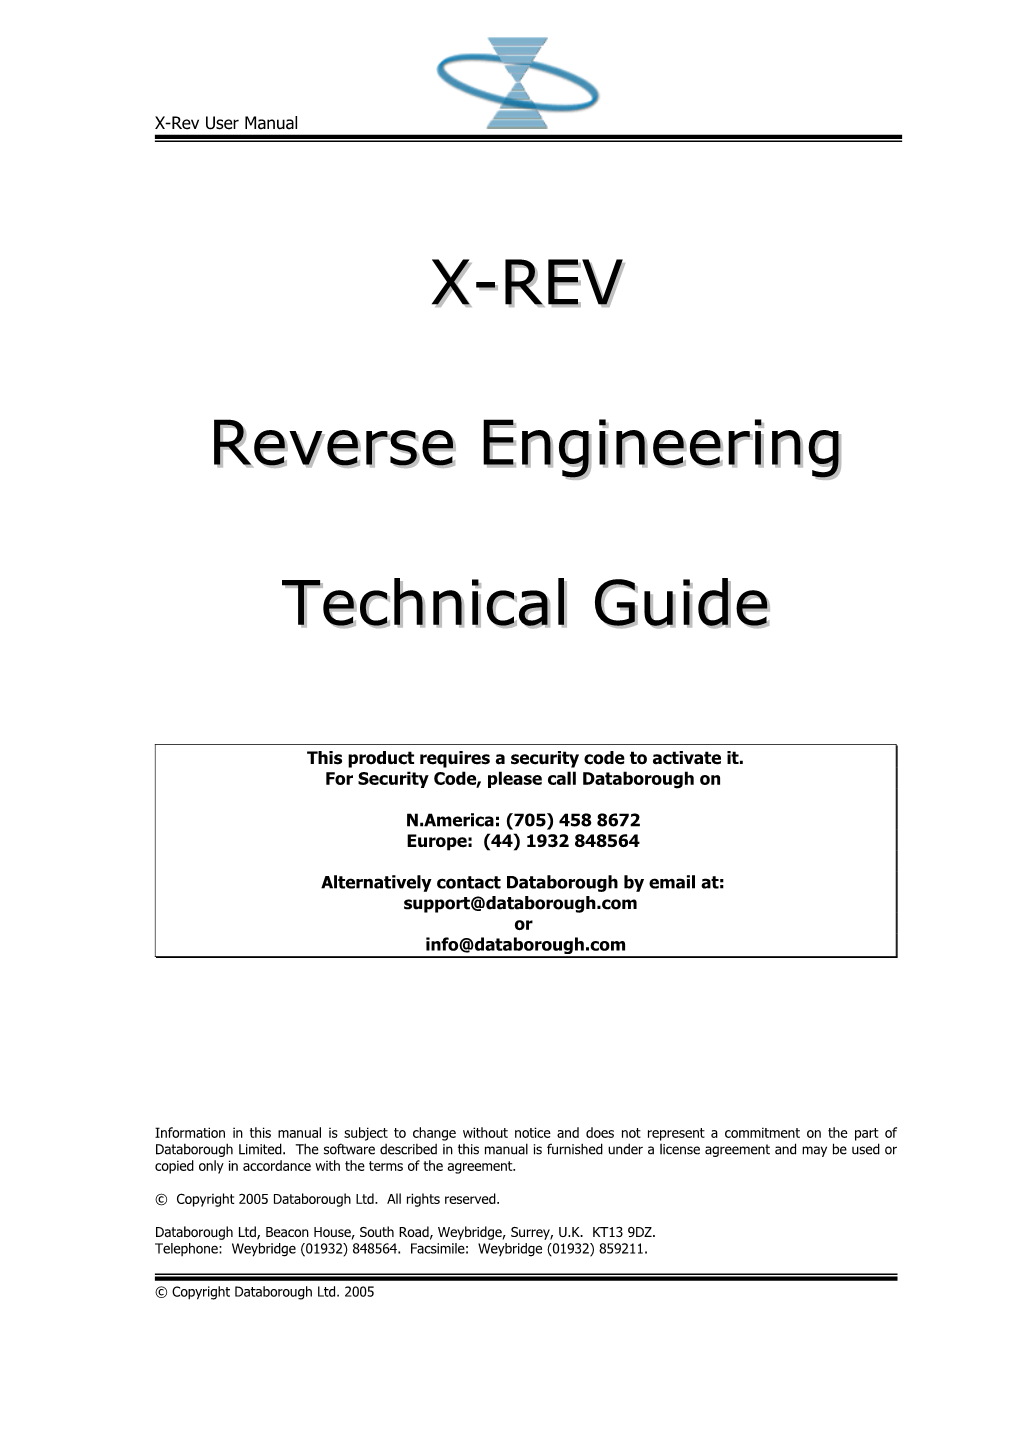 X-Rev Technical Guide